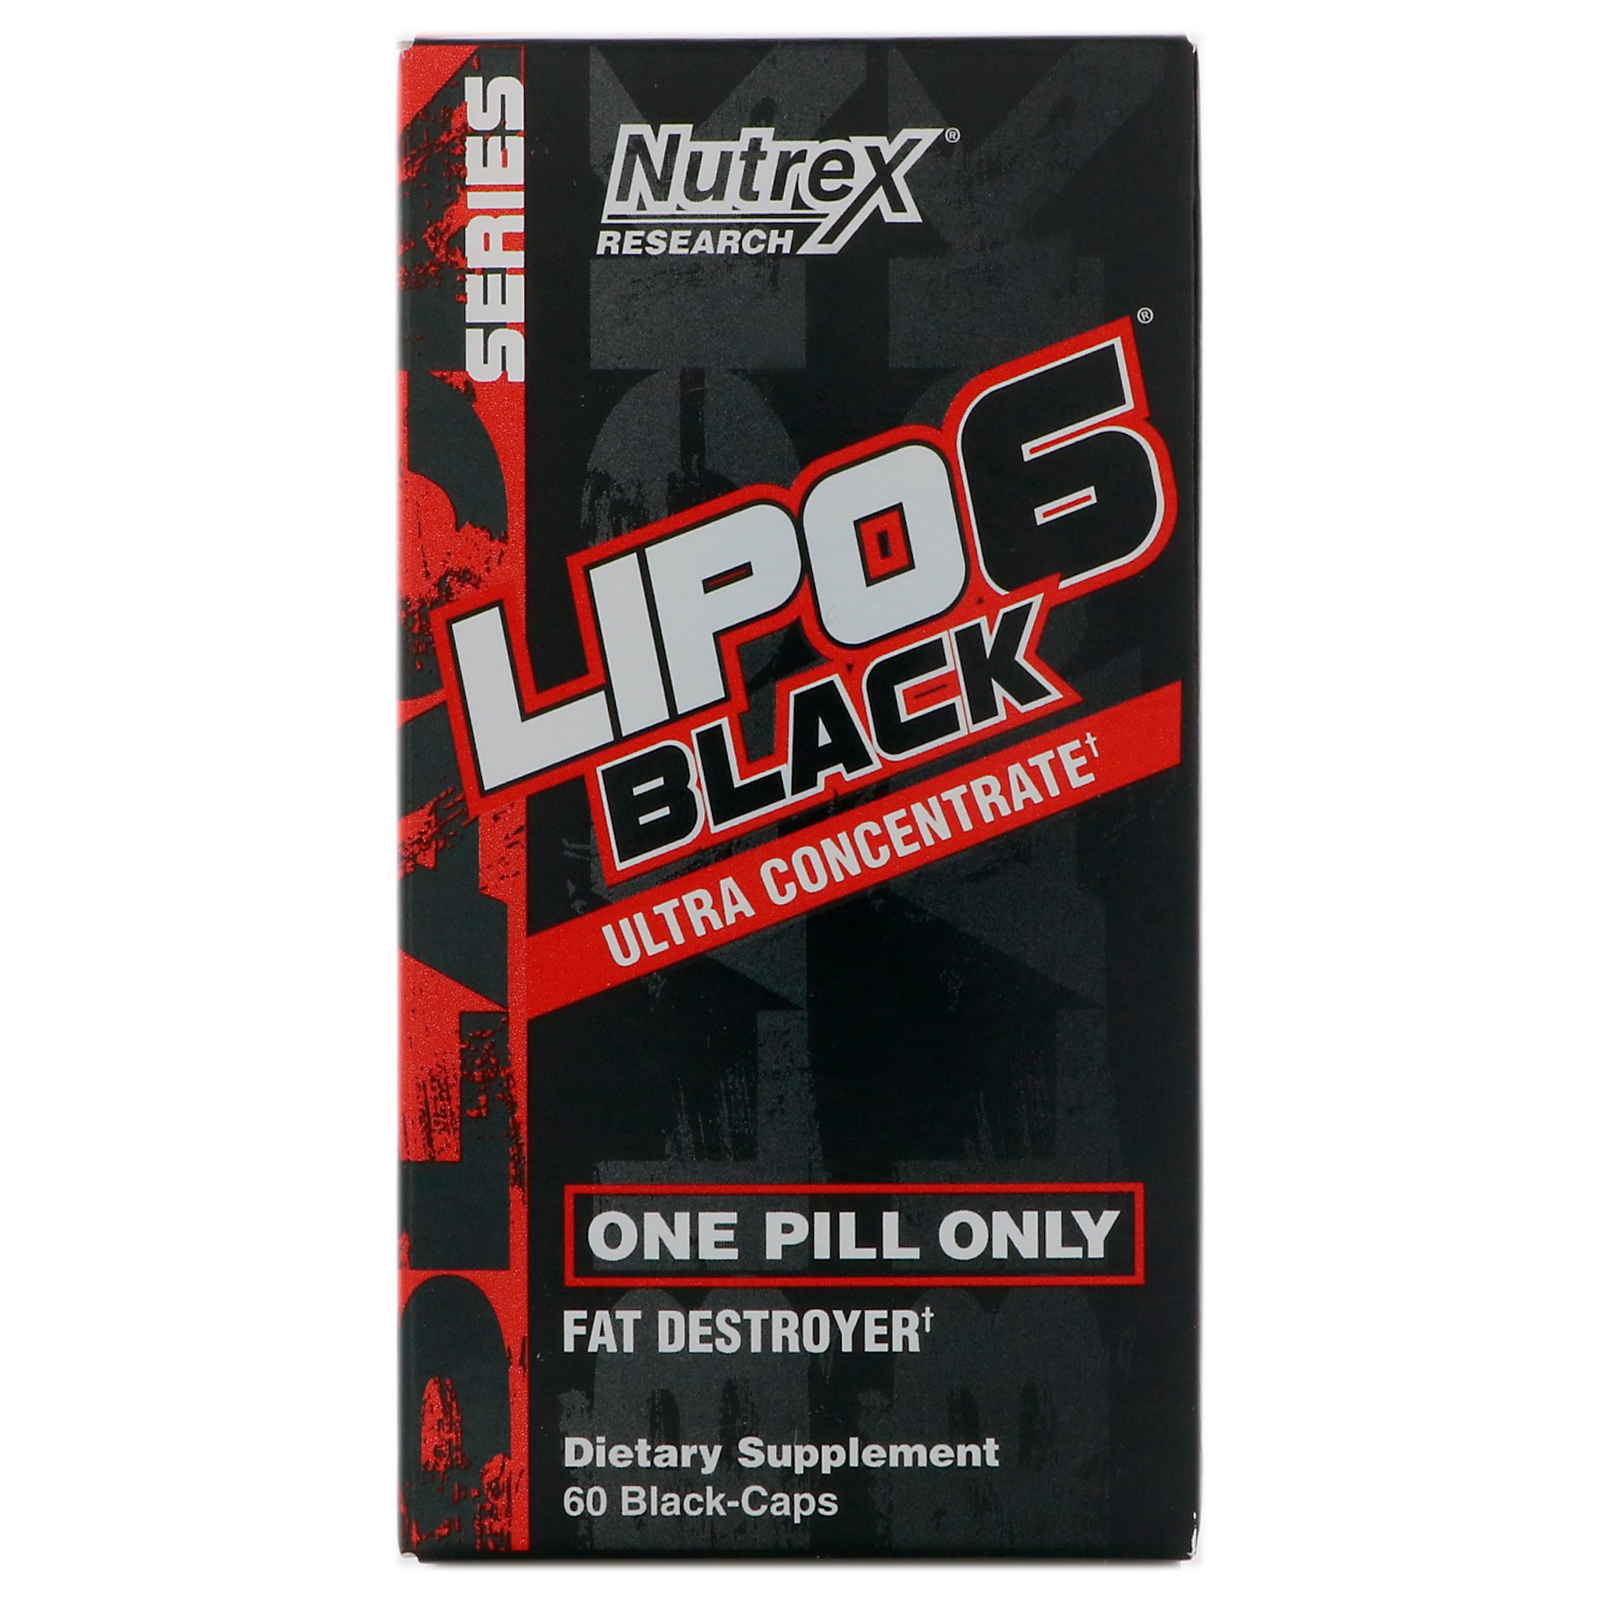 Nutrex Lipo 6 Black - 120 caps